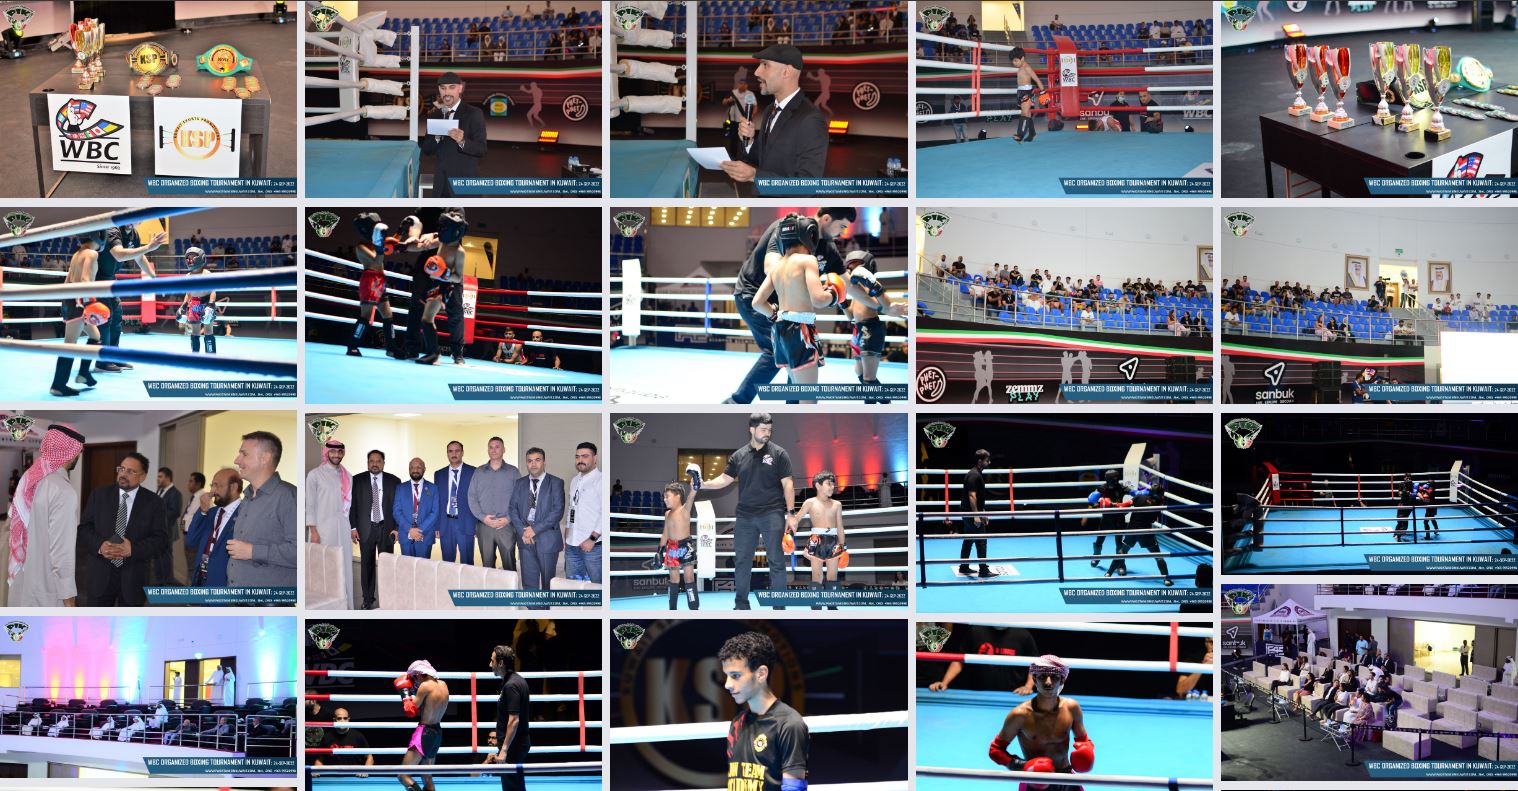 WBC organized boxing tournament in Kuwait on 24-Sep-2022